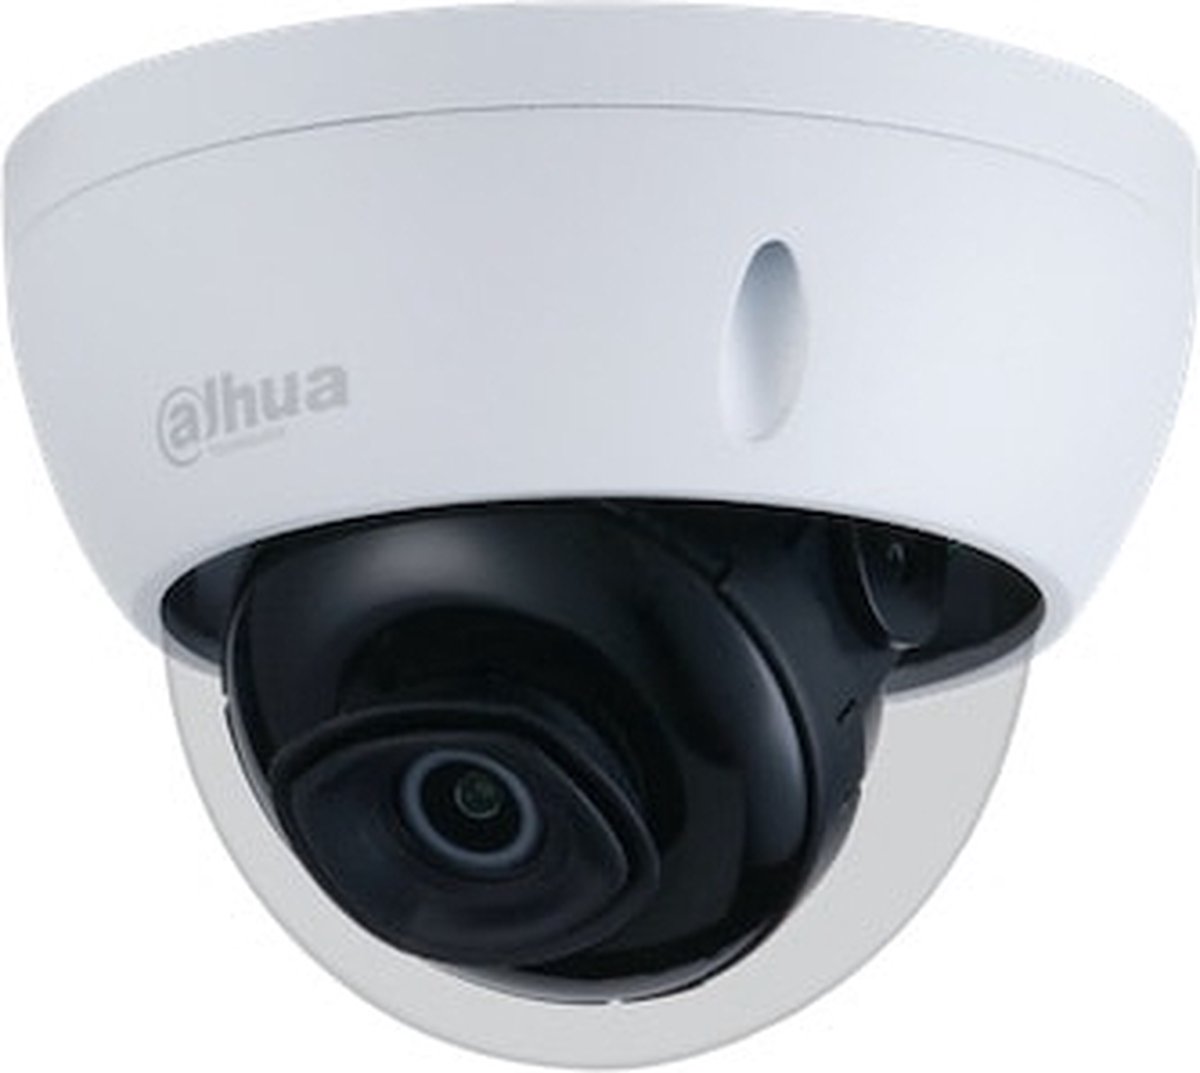 Dahua IPC-HDBW2531E-S-S2 Full HD 5MP Starlight buiten dome camera met IR nachtzicht, 2.8mm lens, 120dB WDR en SD slot - Beveiligingscamera IP camera bewakingscamera camerabewaking veiligheidscamera beveiliging netwerk camera webcam